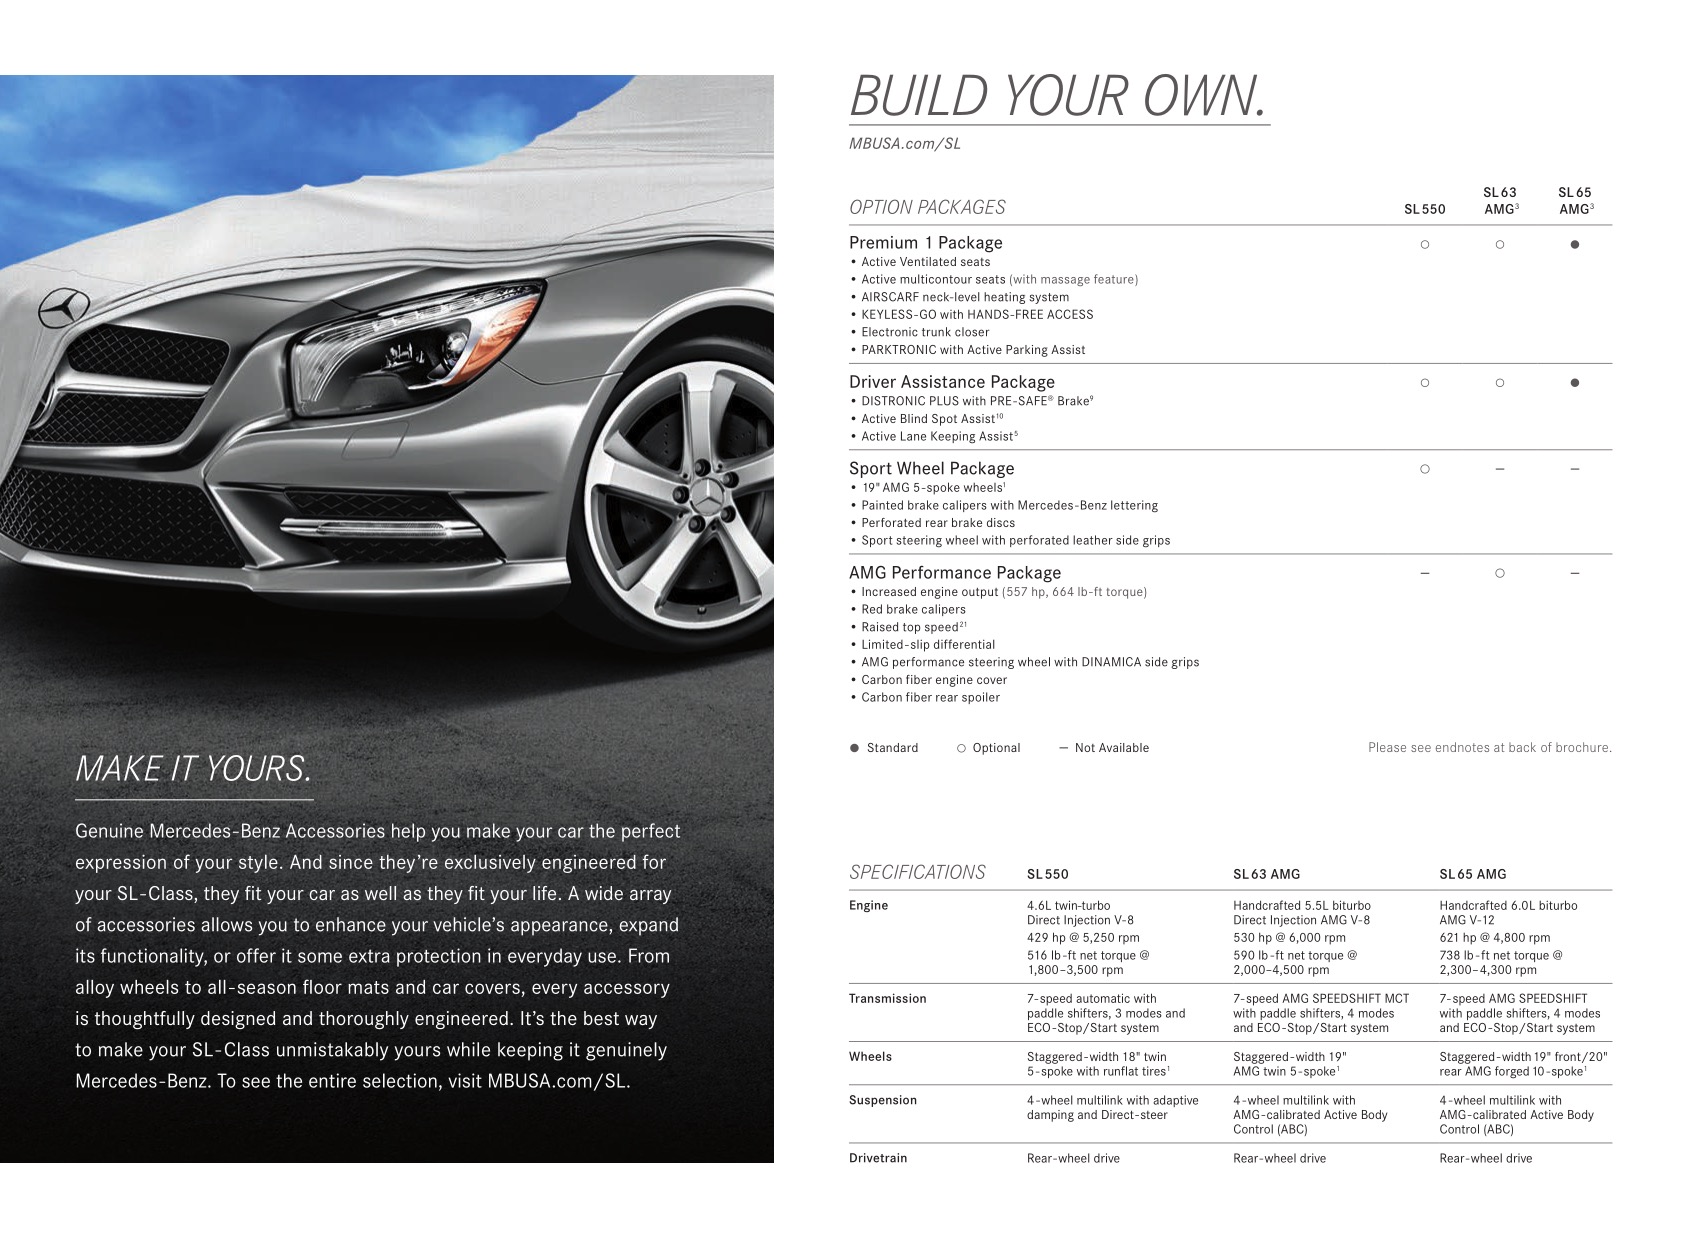 2013 Mercedes-Benz SL Brochure Page 17